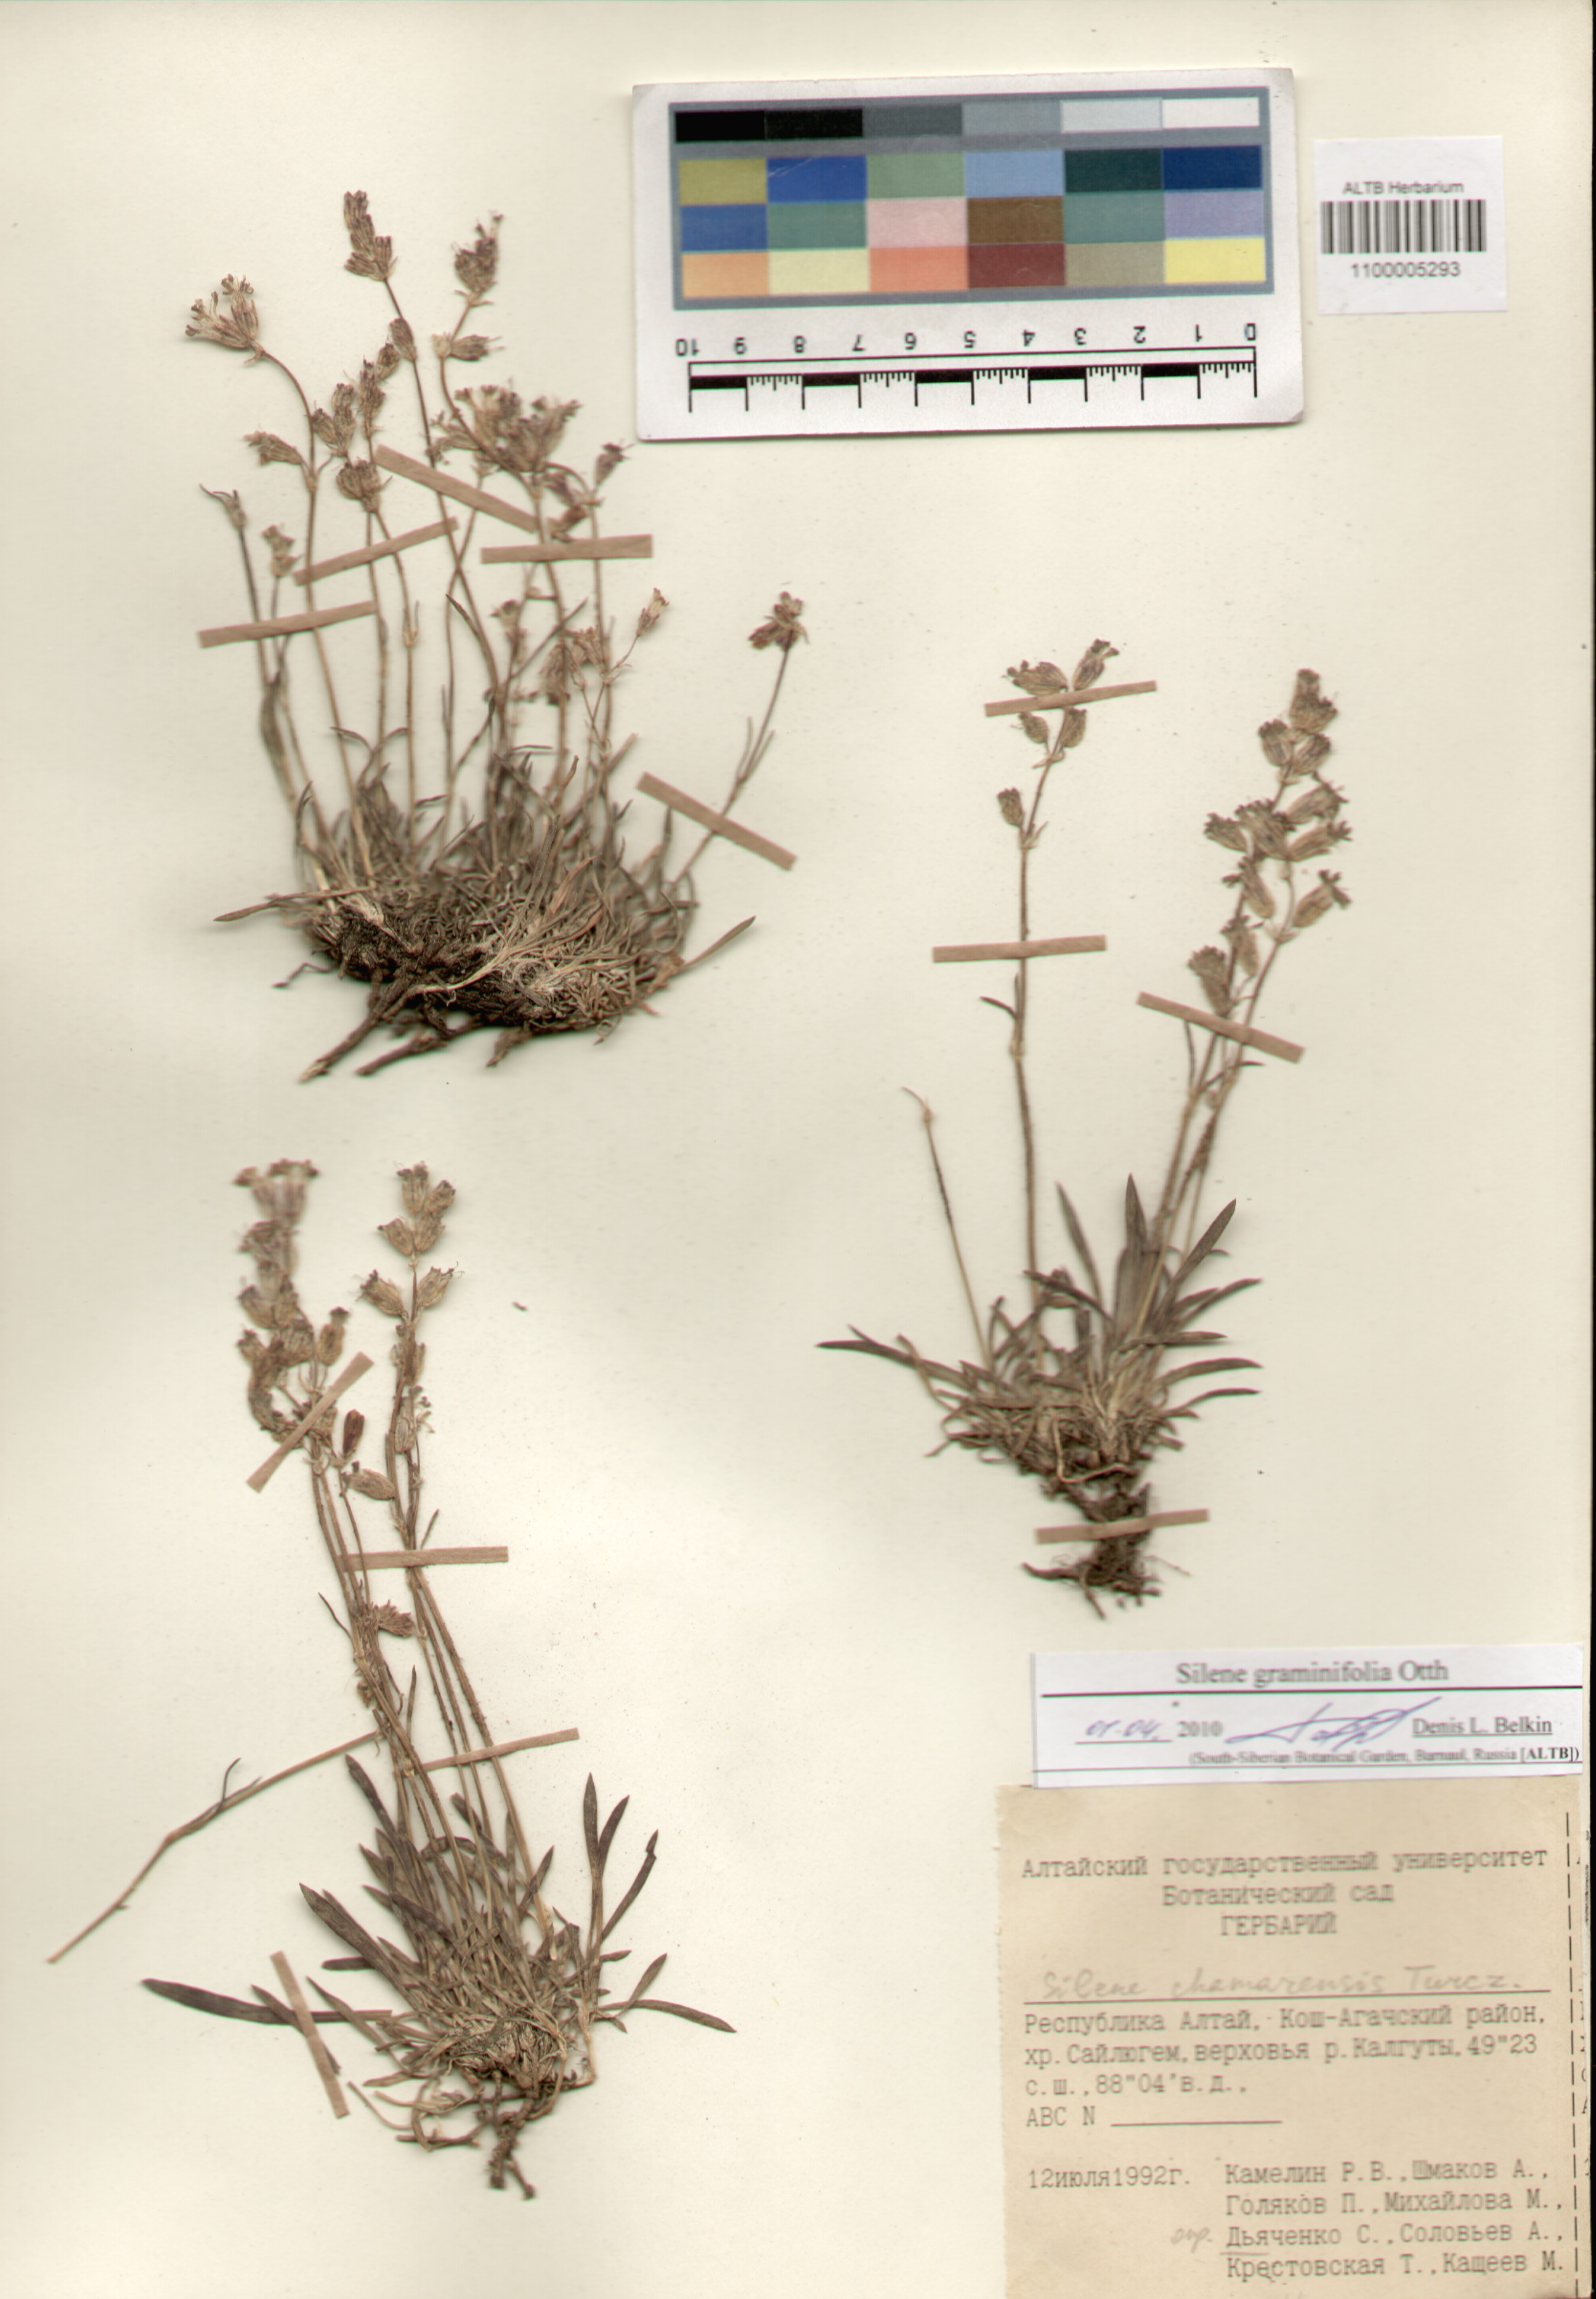 Caryophyllaceae,Silene graminifolia Otth.